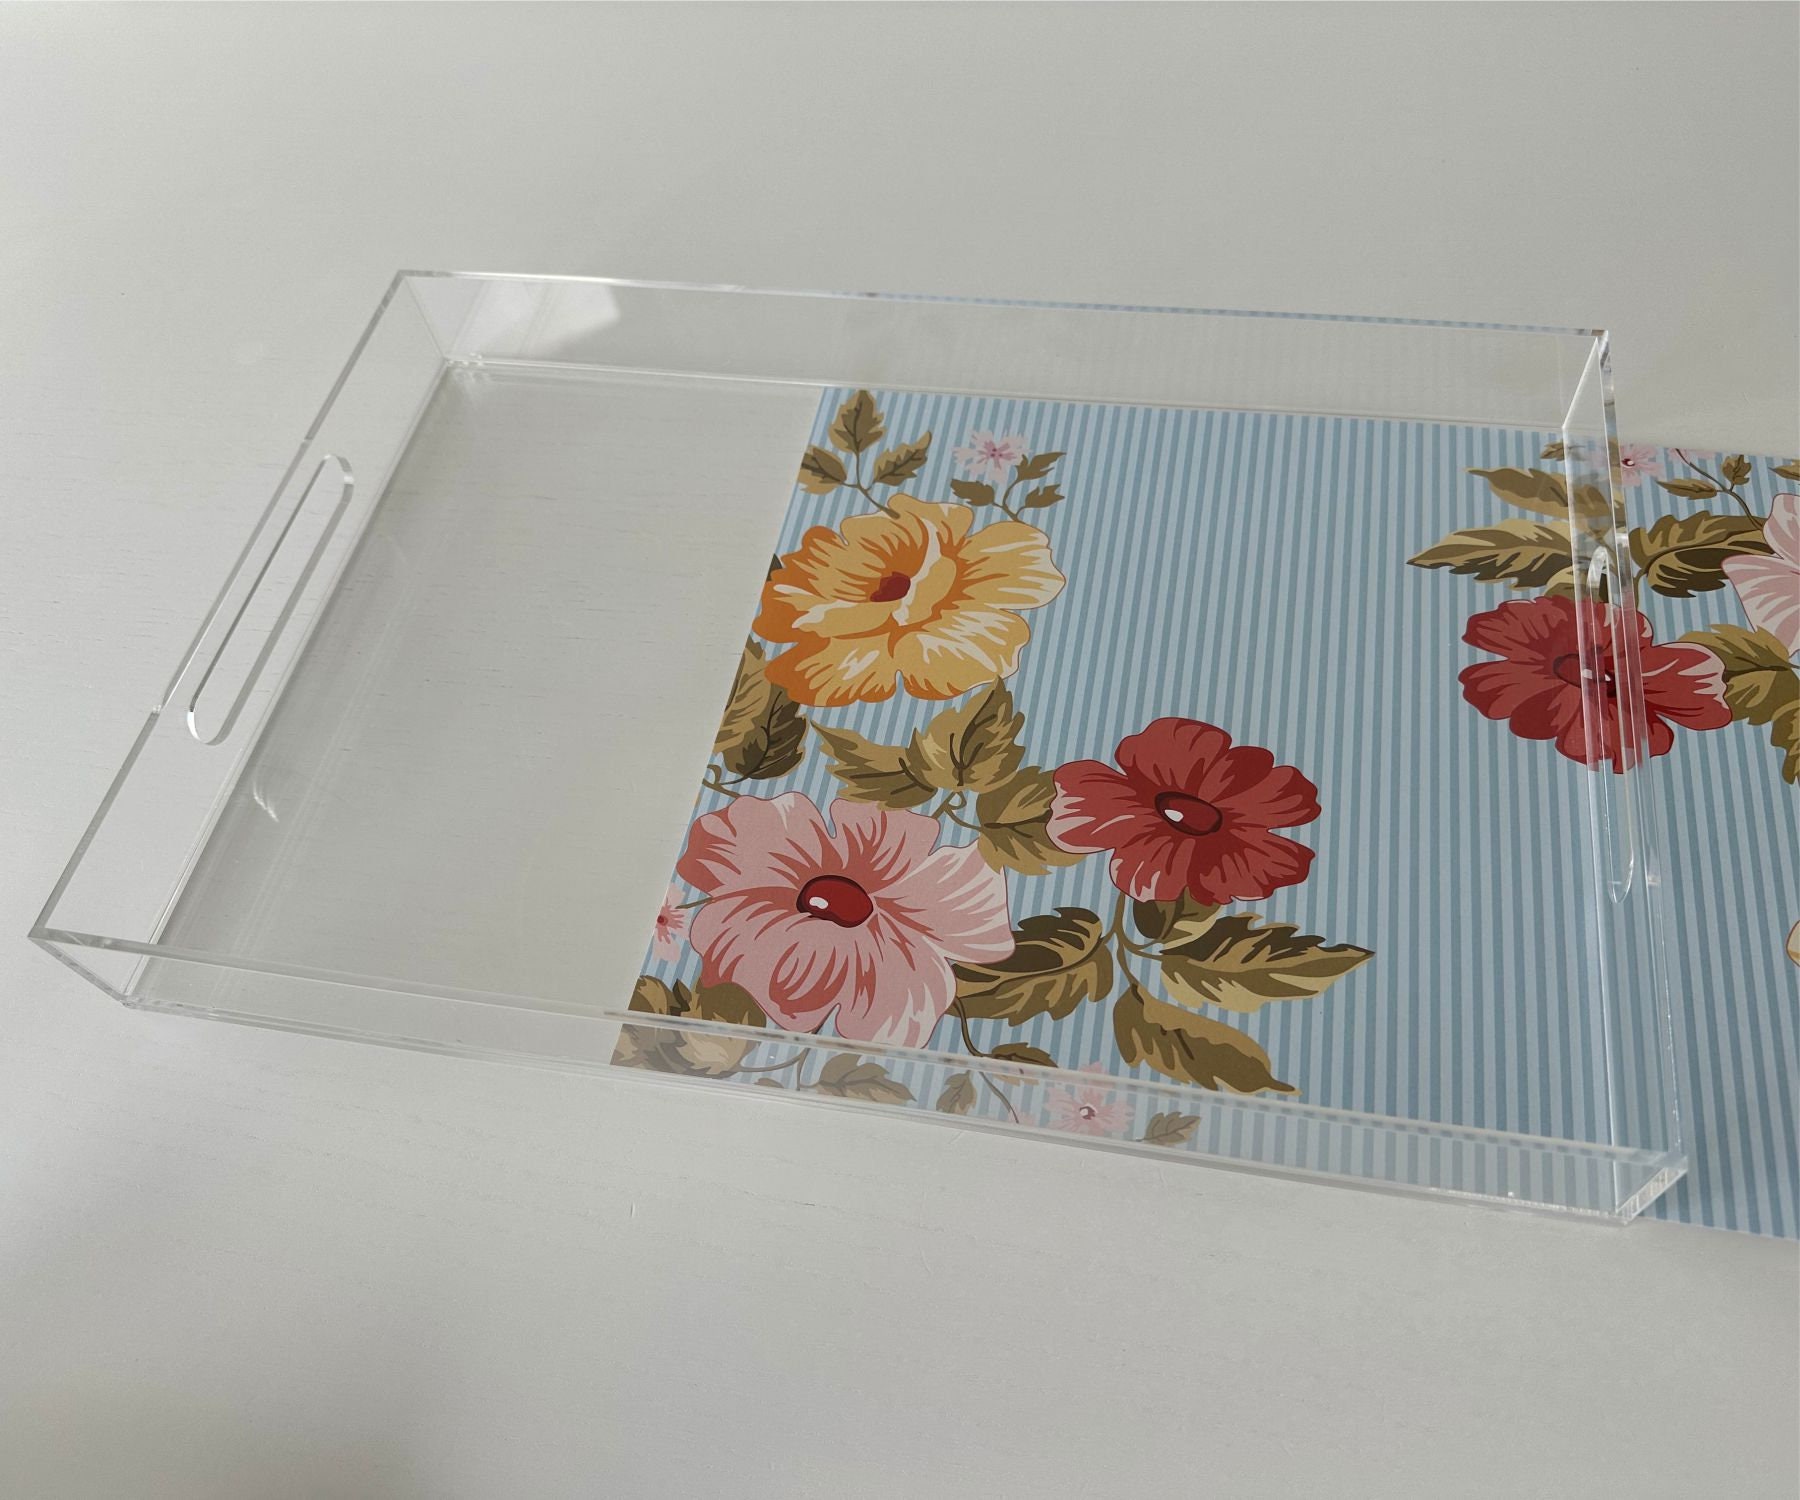 Acrylic Tray with Papel Picado Insert - Small